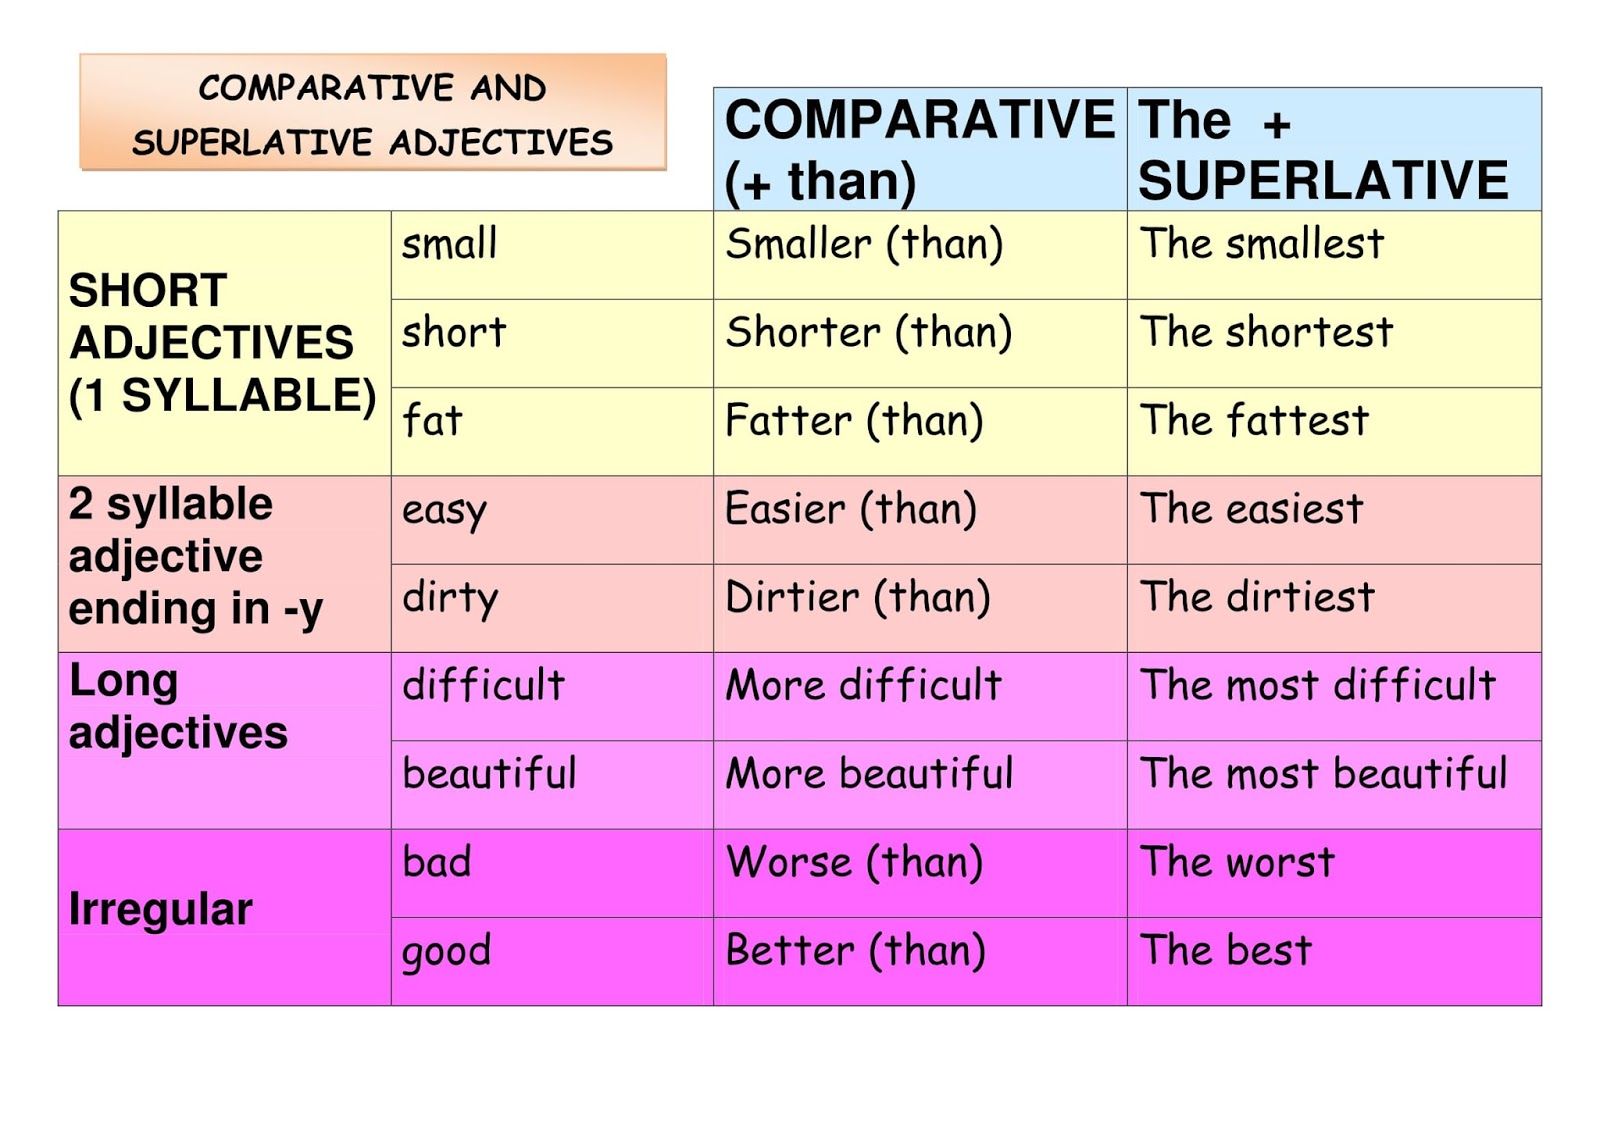 Adjectives таблица. Superlative adjectives правило. Таблица Comparative and Superlative. Comparative and Superlative forms of adjectives. Comparative and Superlative adjectives правило.